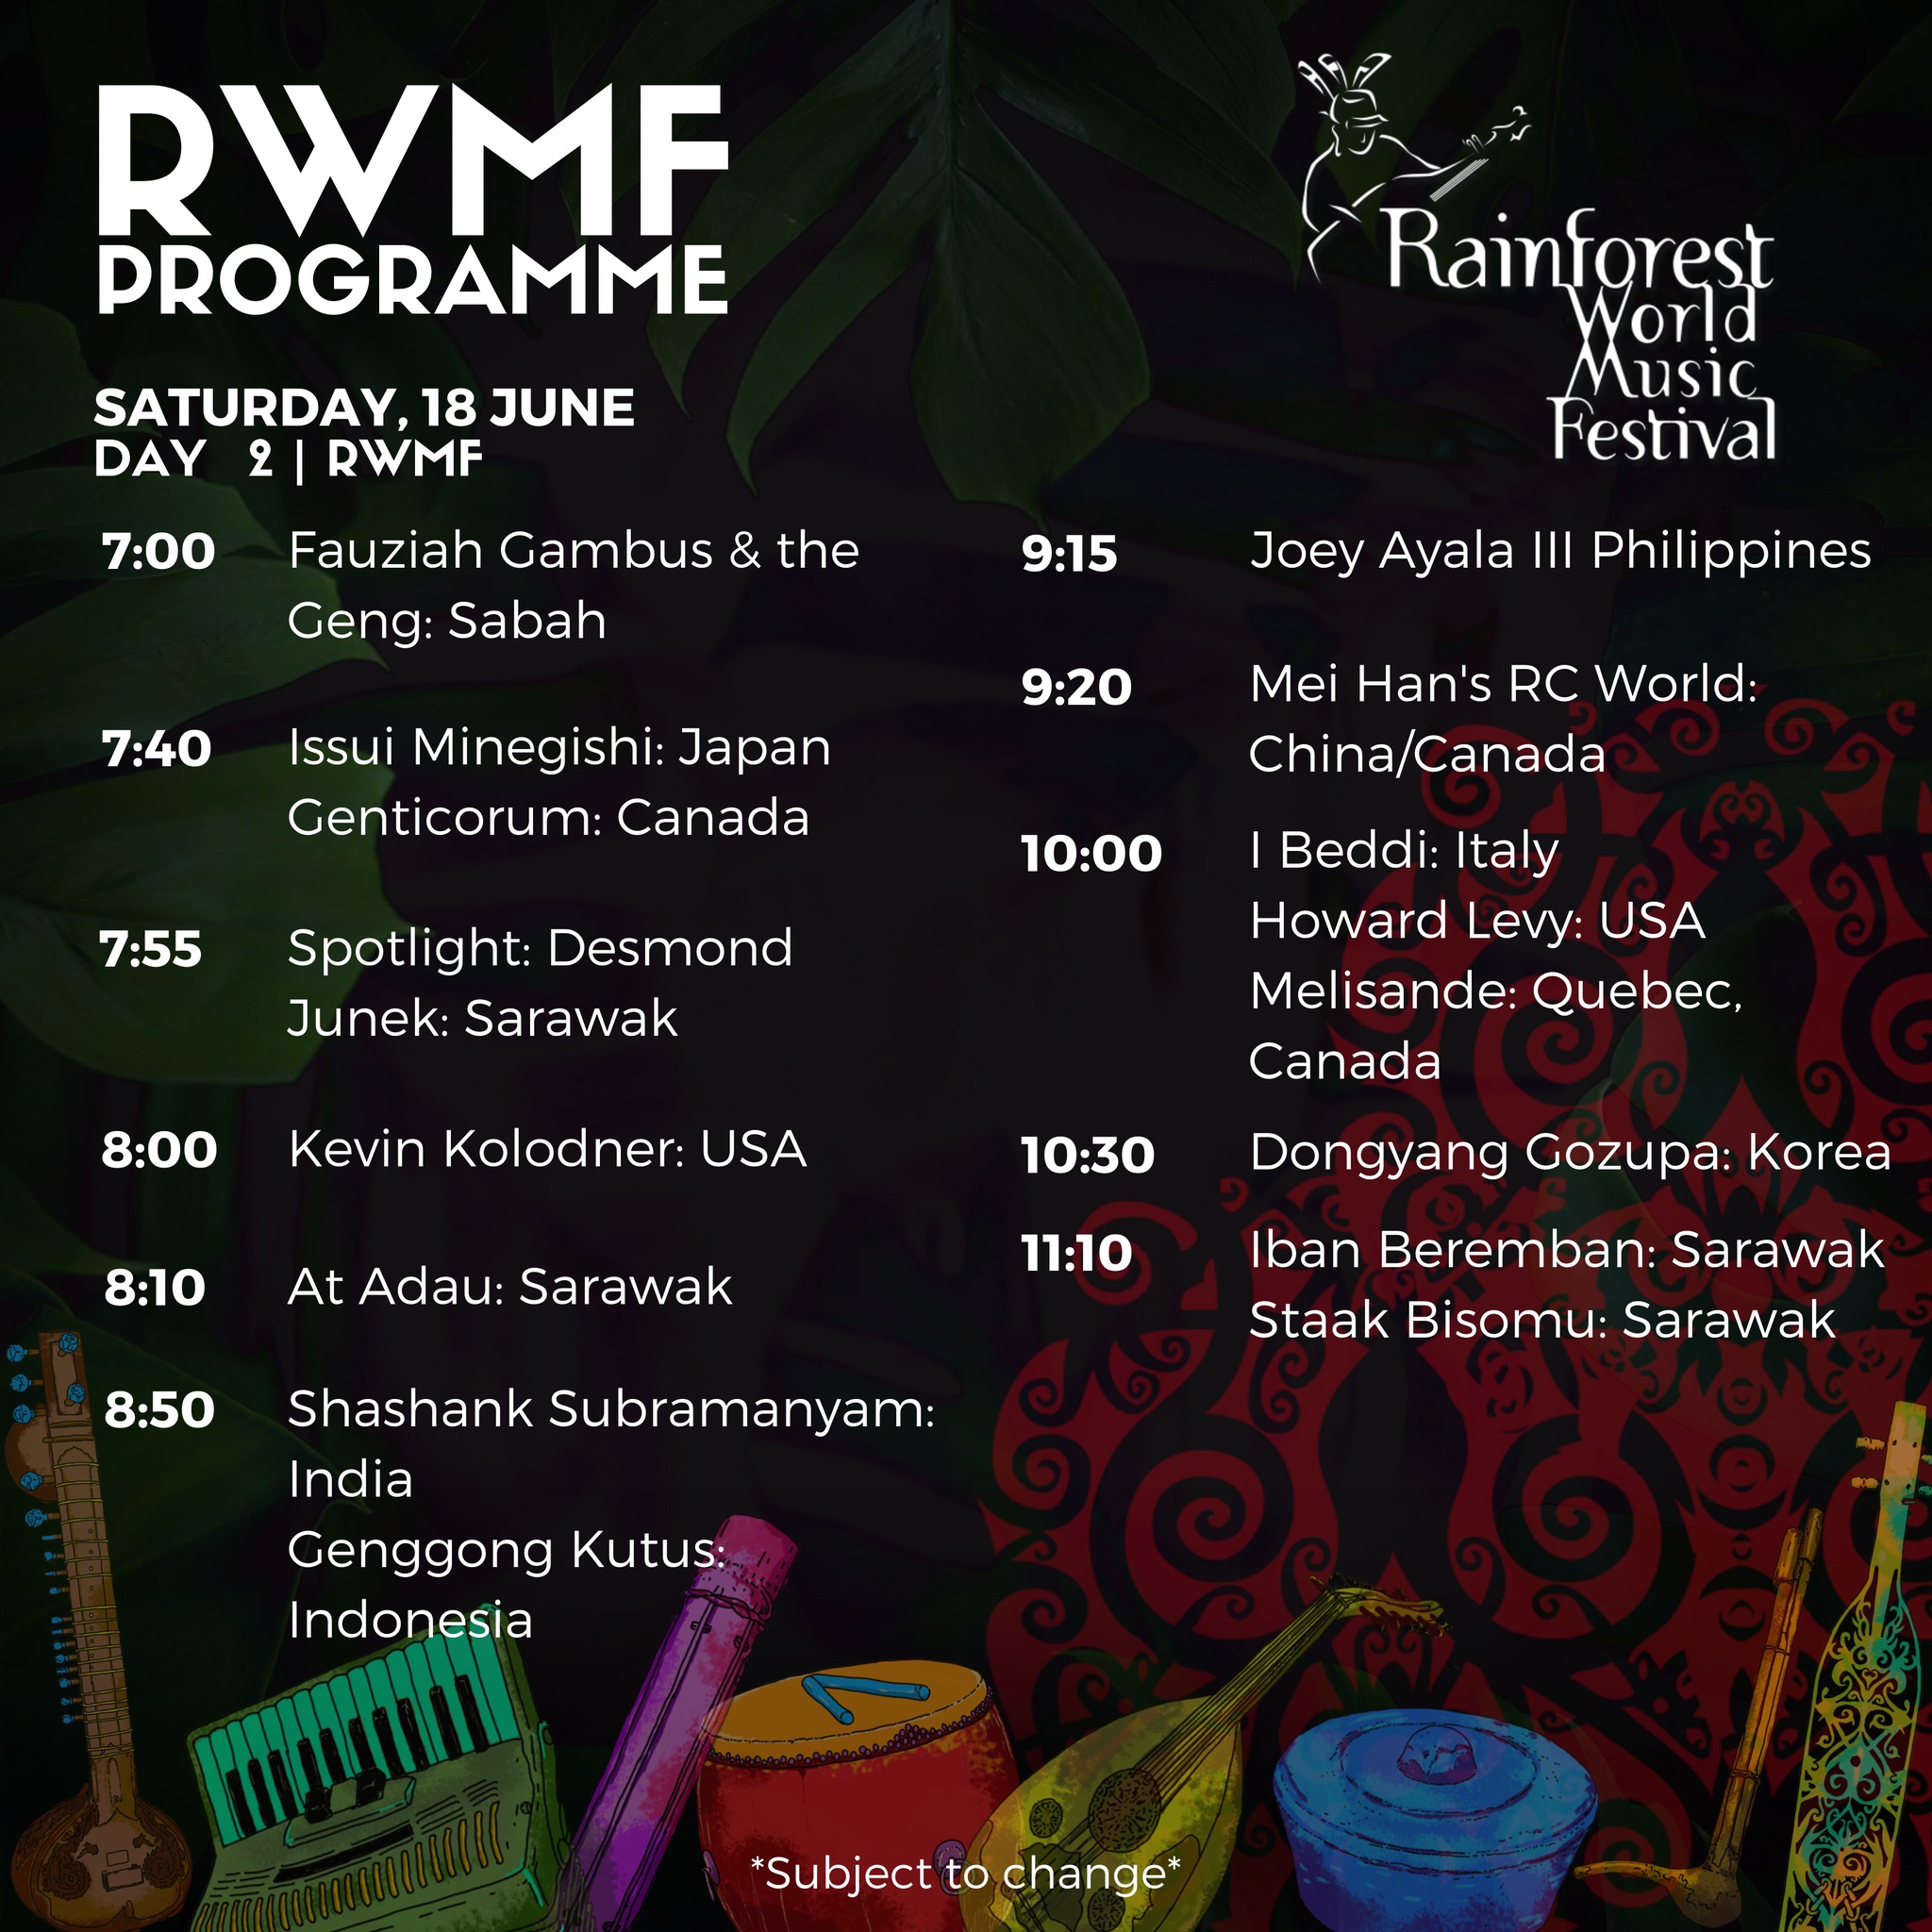 The Rainforest World Music Festival 2022 BRWMF DAY 2